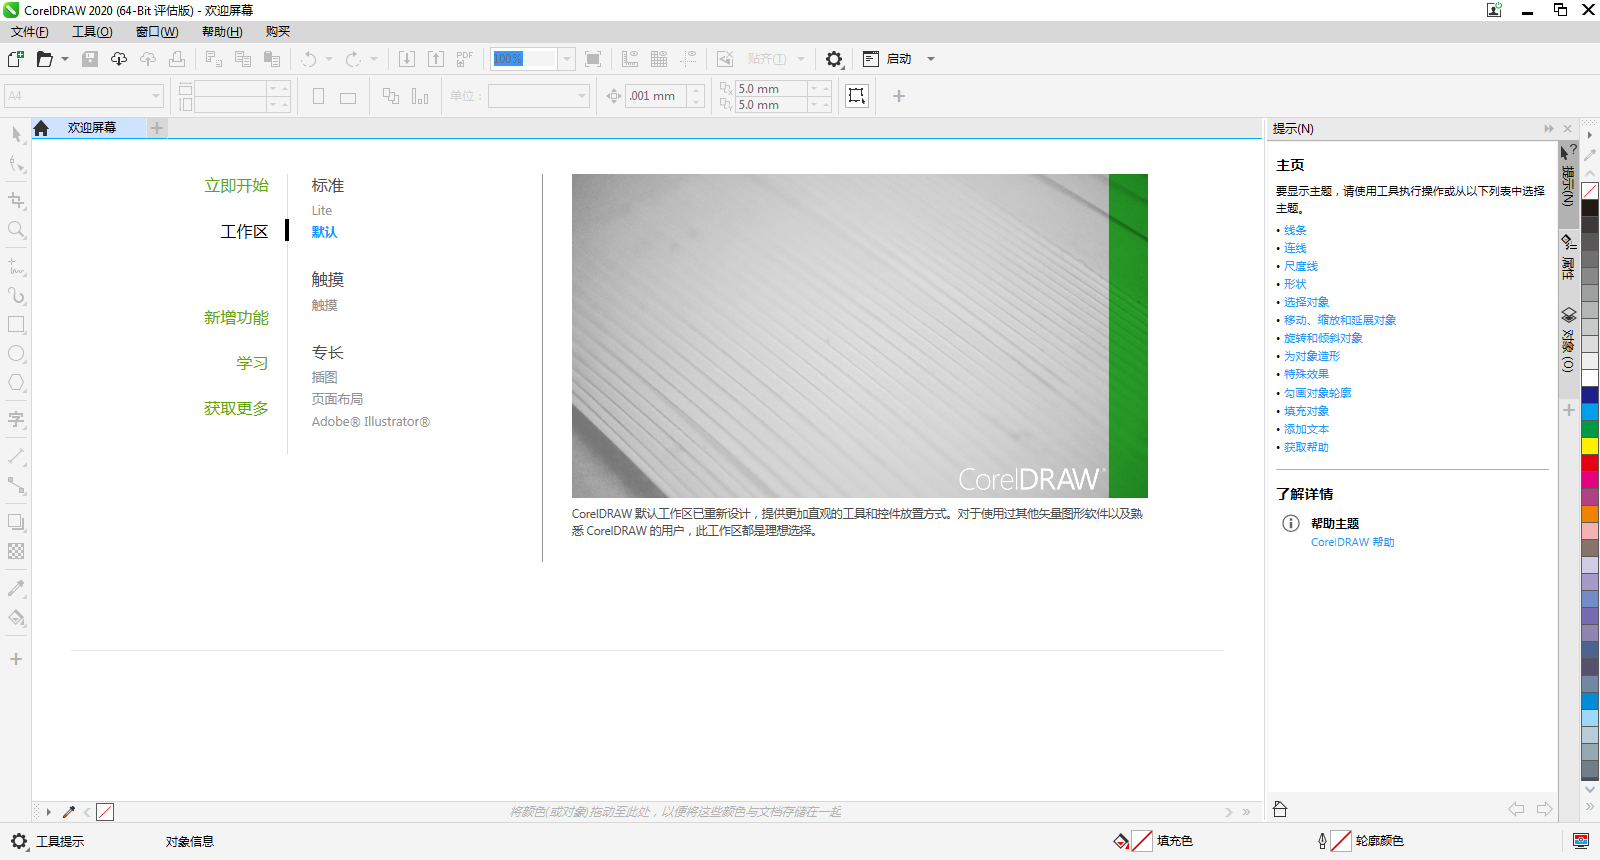 CorelDRAW Graphics Suite 2020 V22.0.0.412 MAC